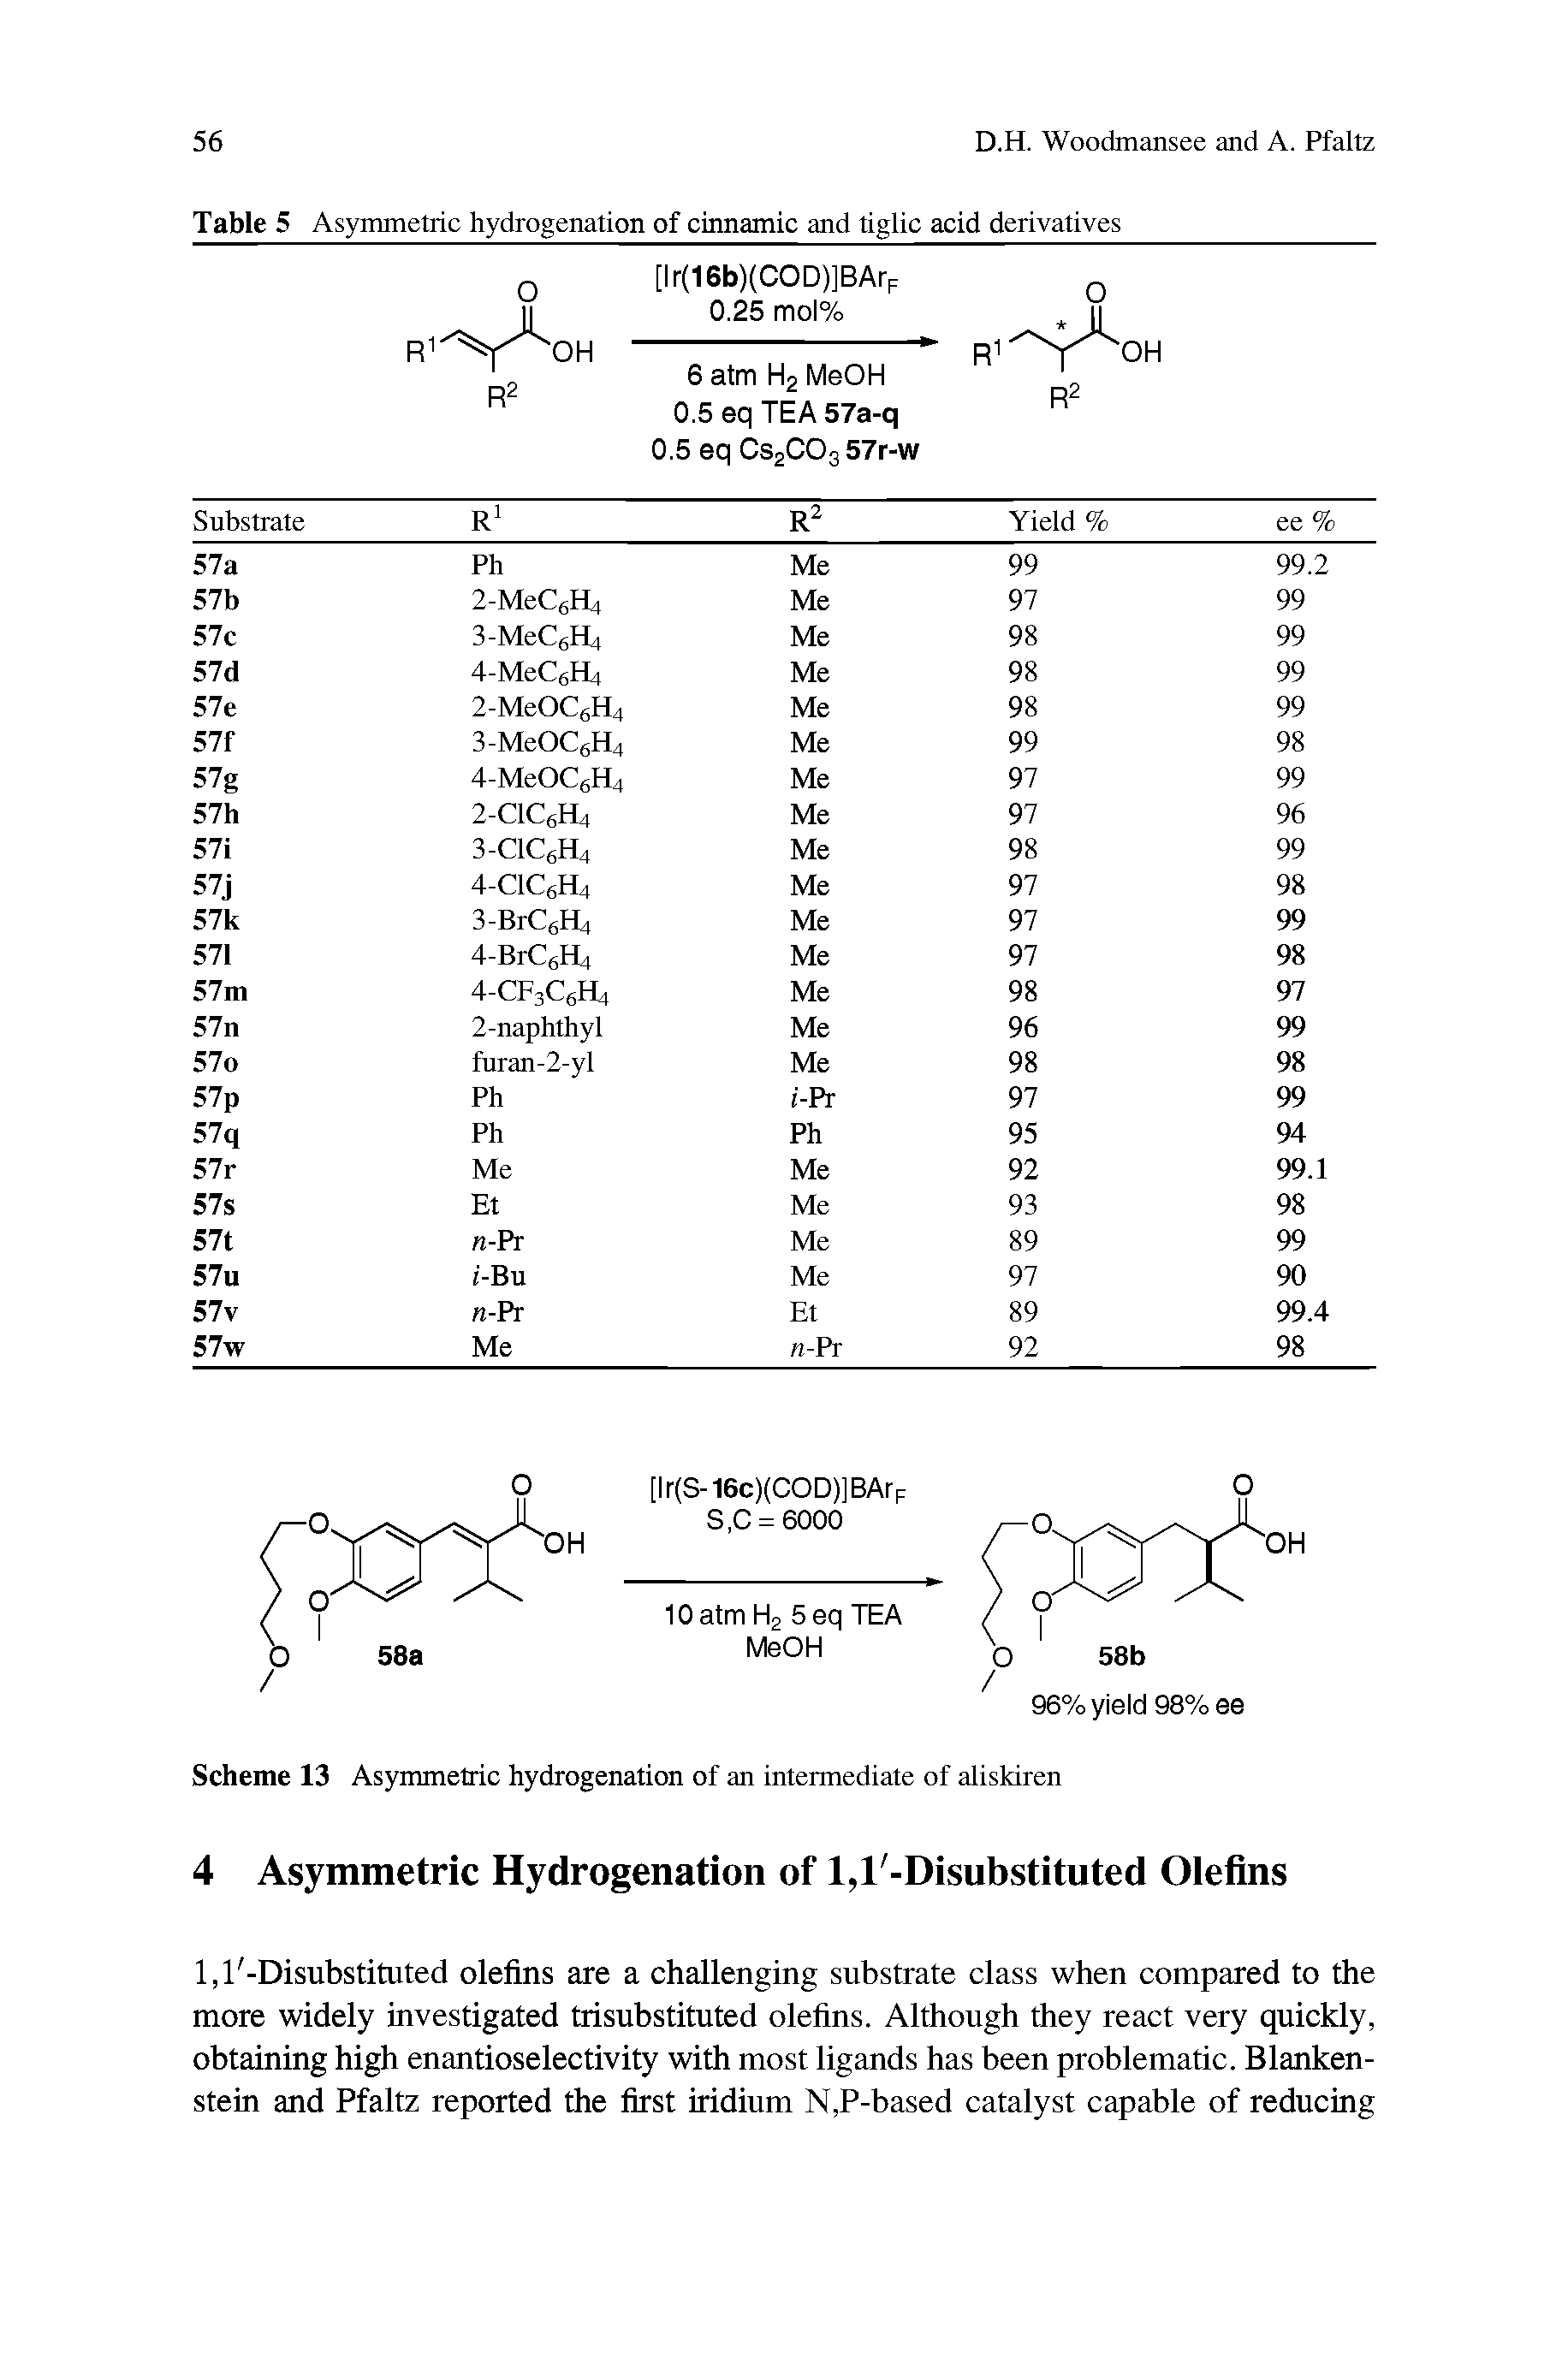 Table 5 Asymmetric hydrogenation of cinnamic and tiglic acid derivatives...